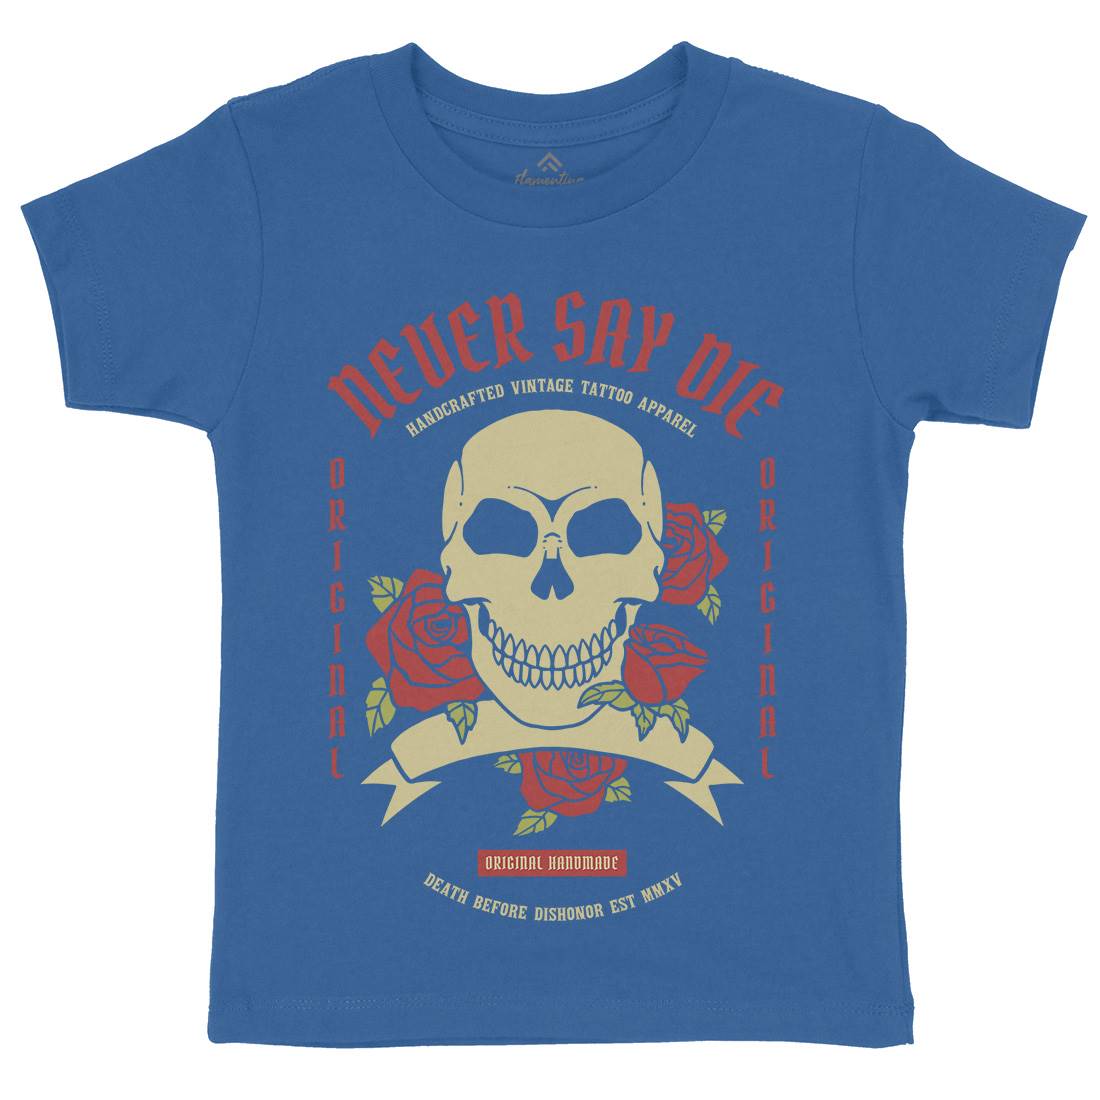 Skull Rose Kids Crew Neck T-Shirt Retro C776